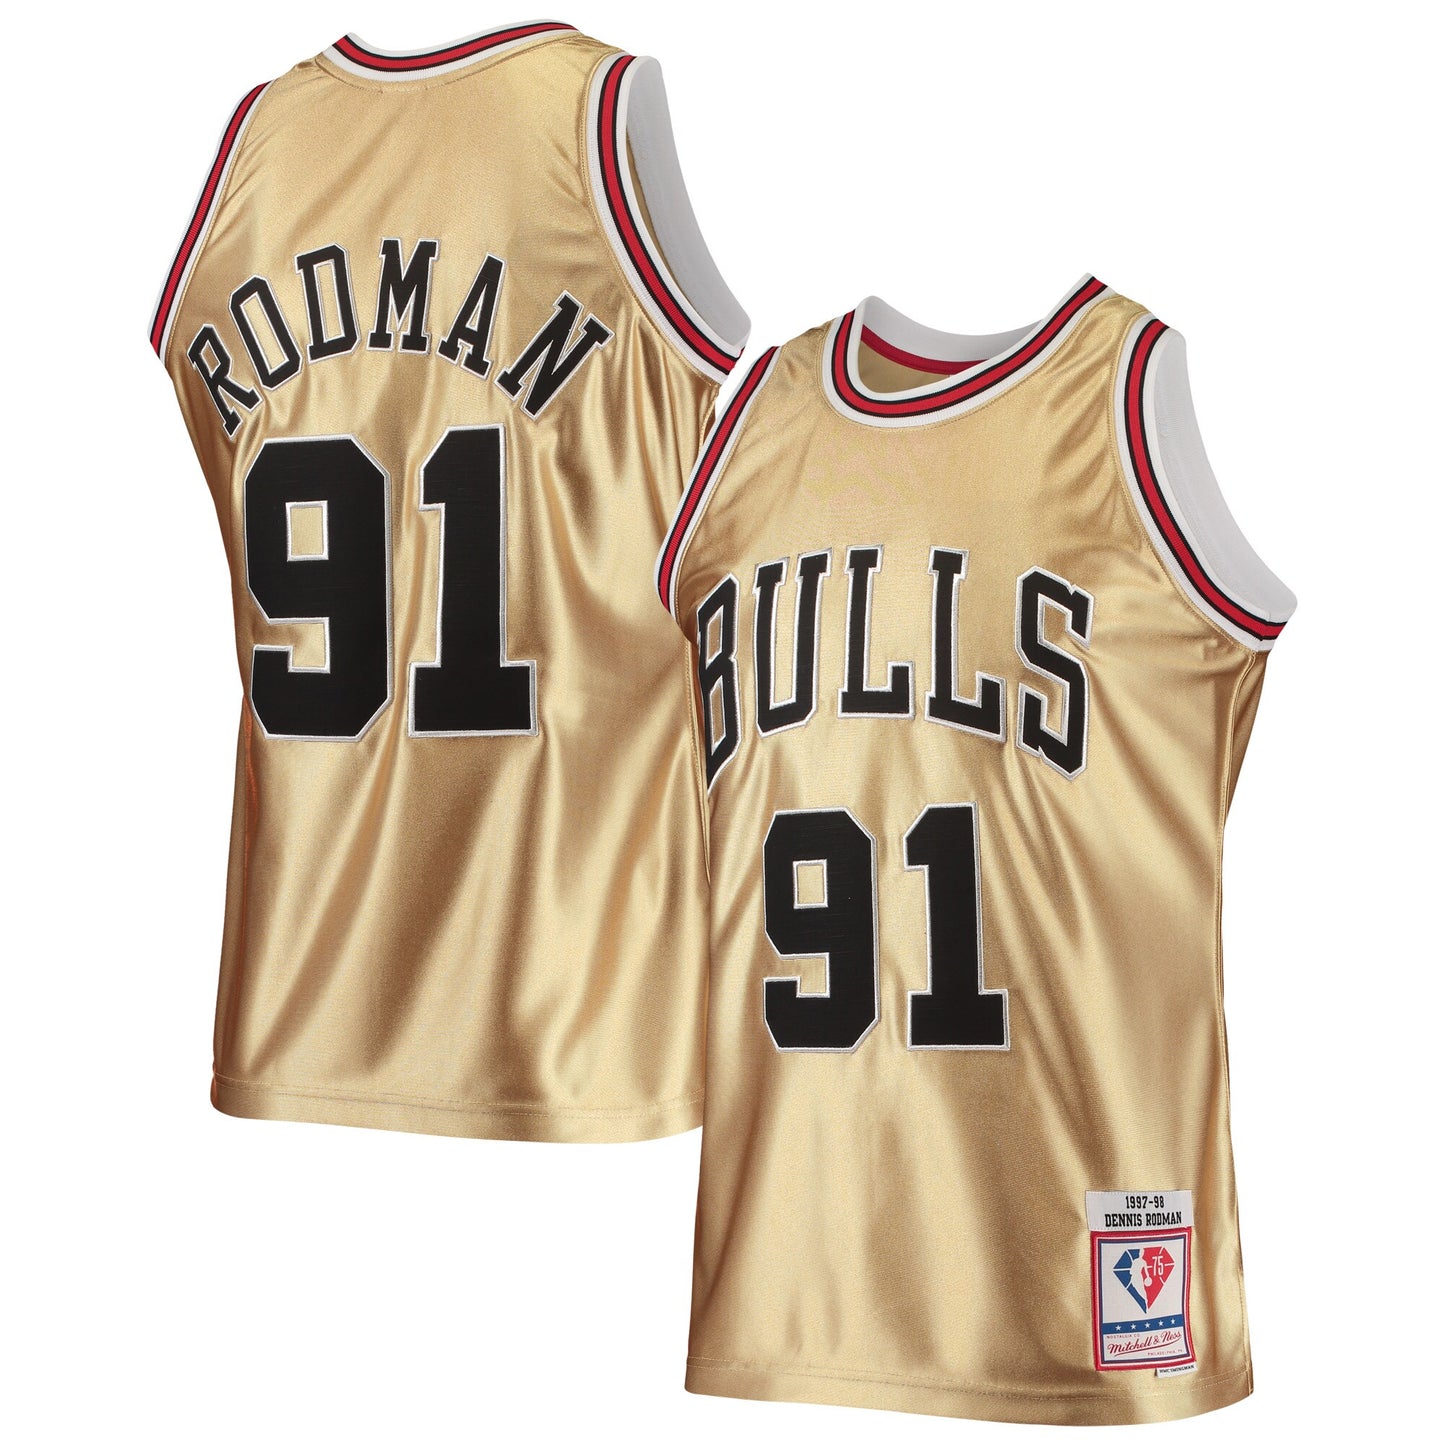 Dennis Rodman Chicago Bulls Mitchell & Ness 75th Anniversary 1997/98 Hardwood Classics Swingman Jersey - Gold